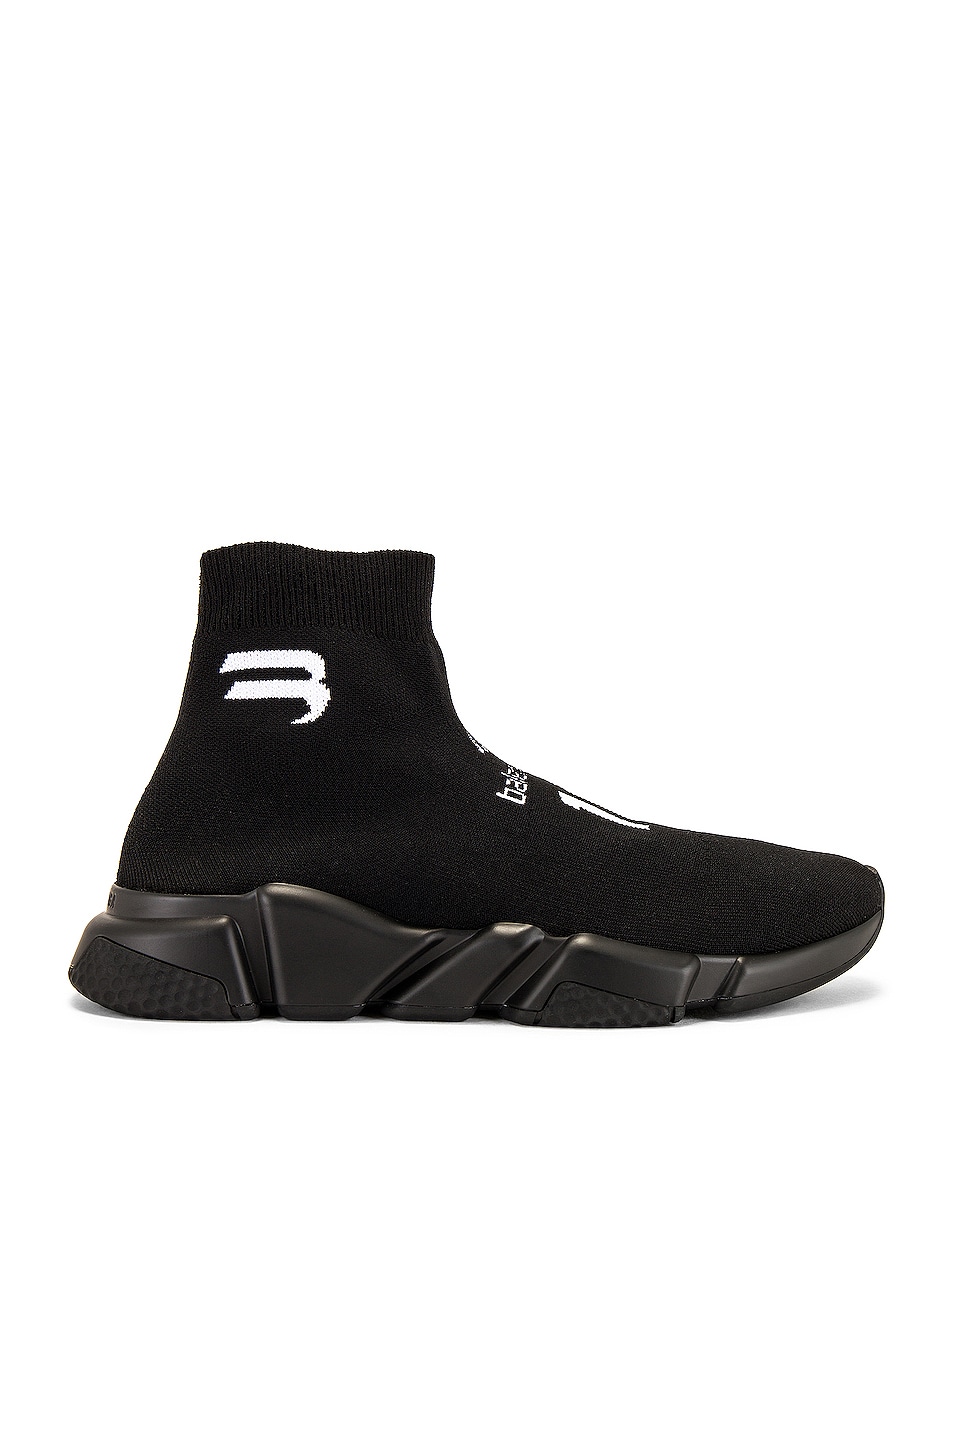 Balenciaga Speed Light Soccer Sneaker in Black | FWRD